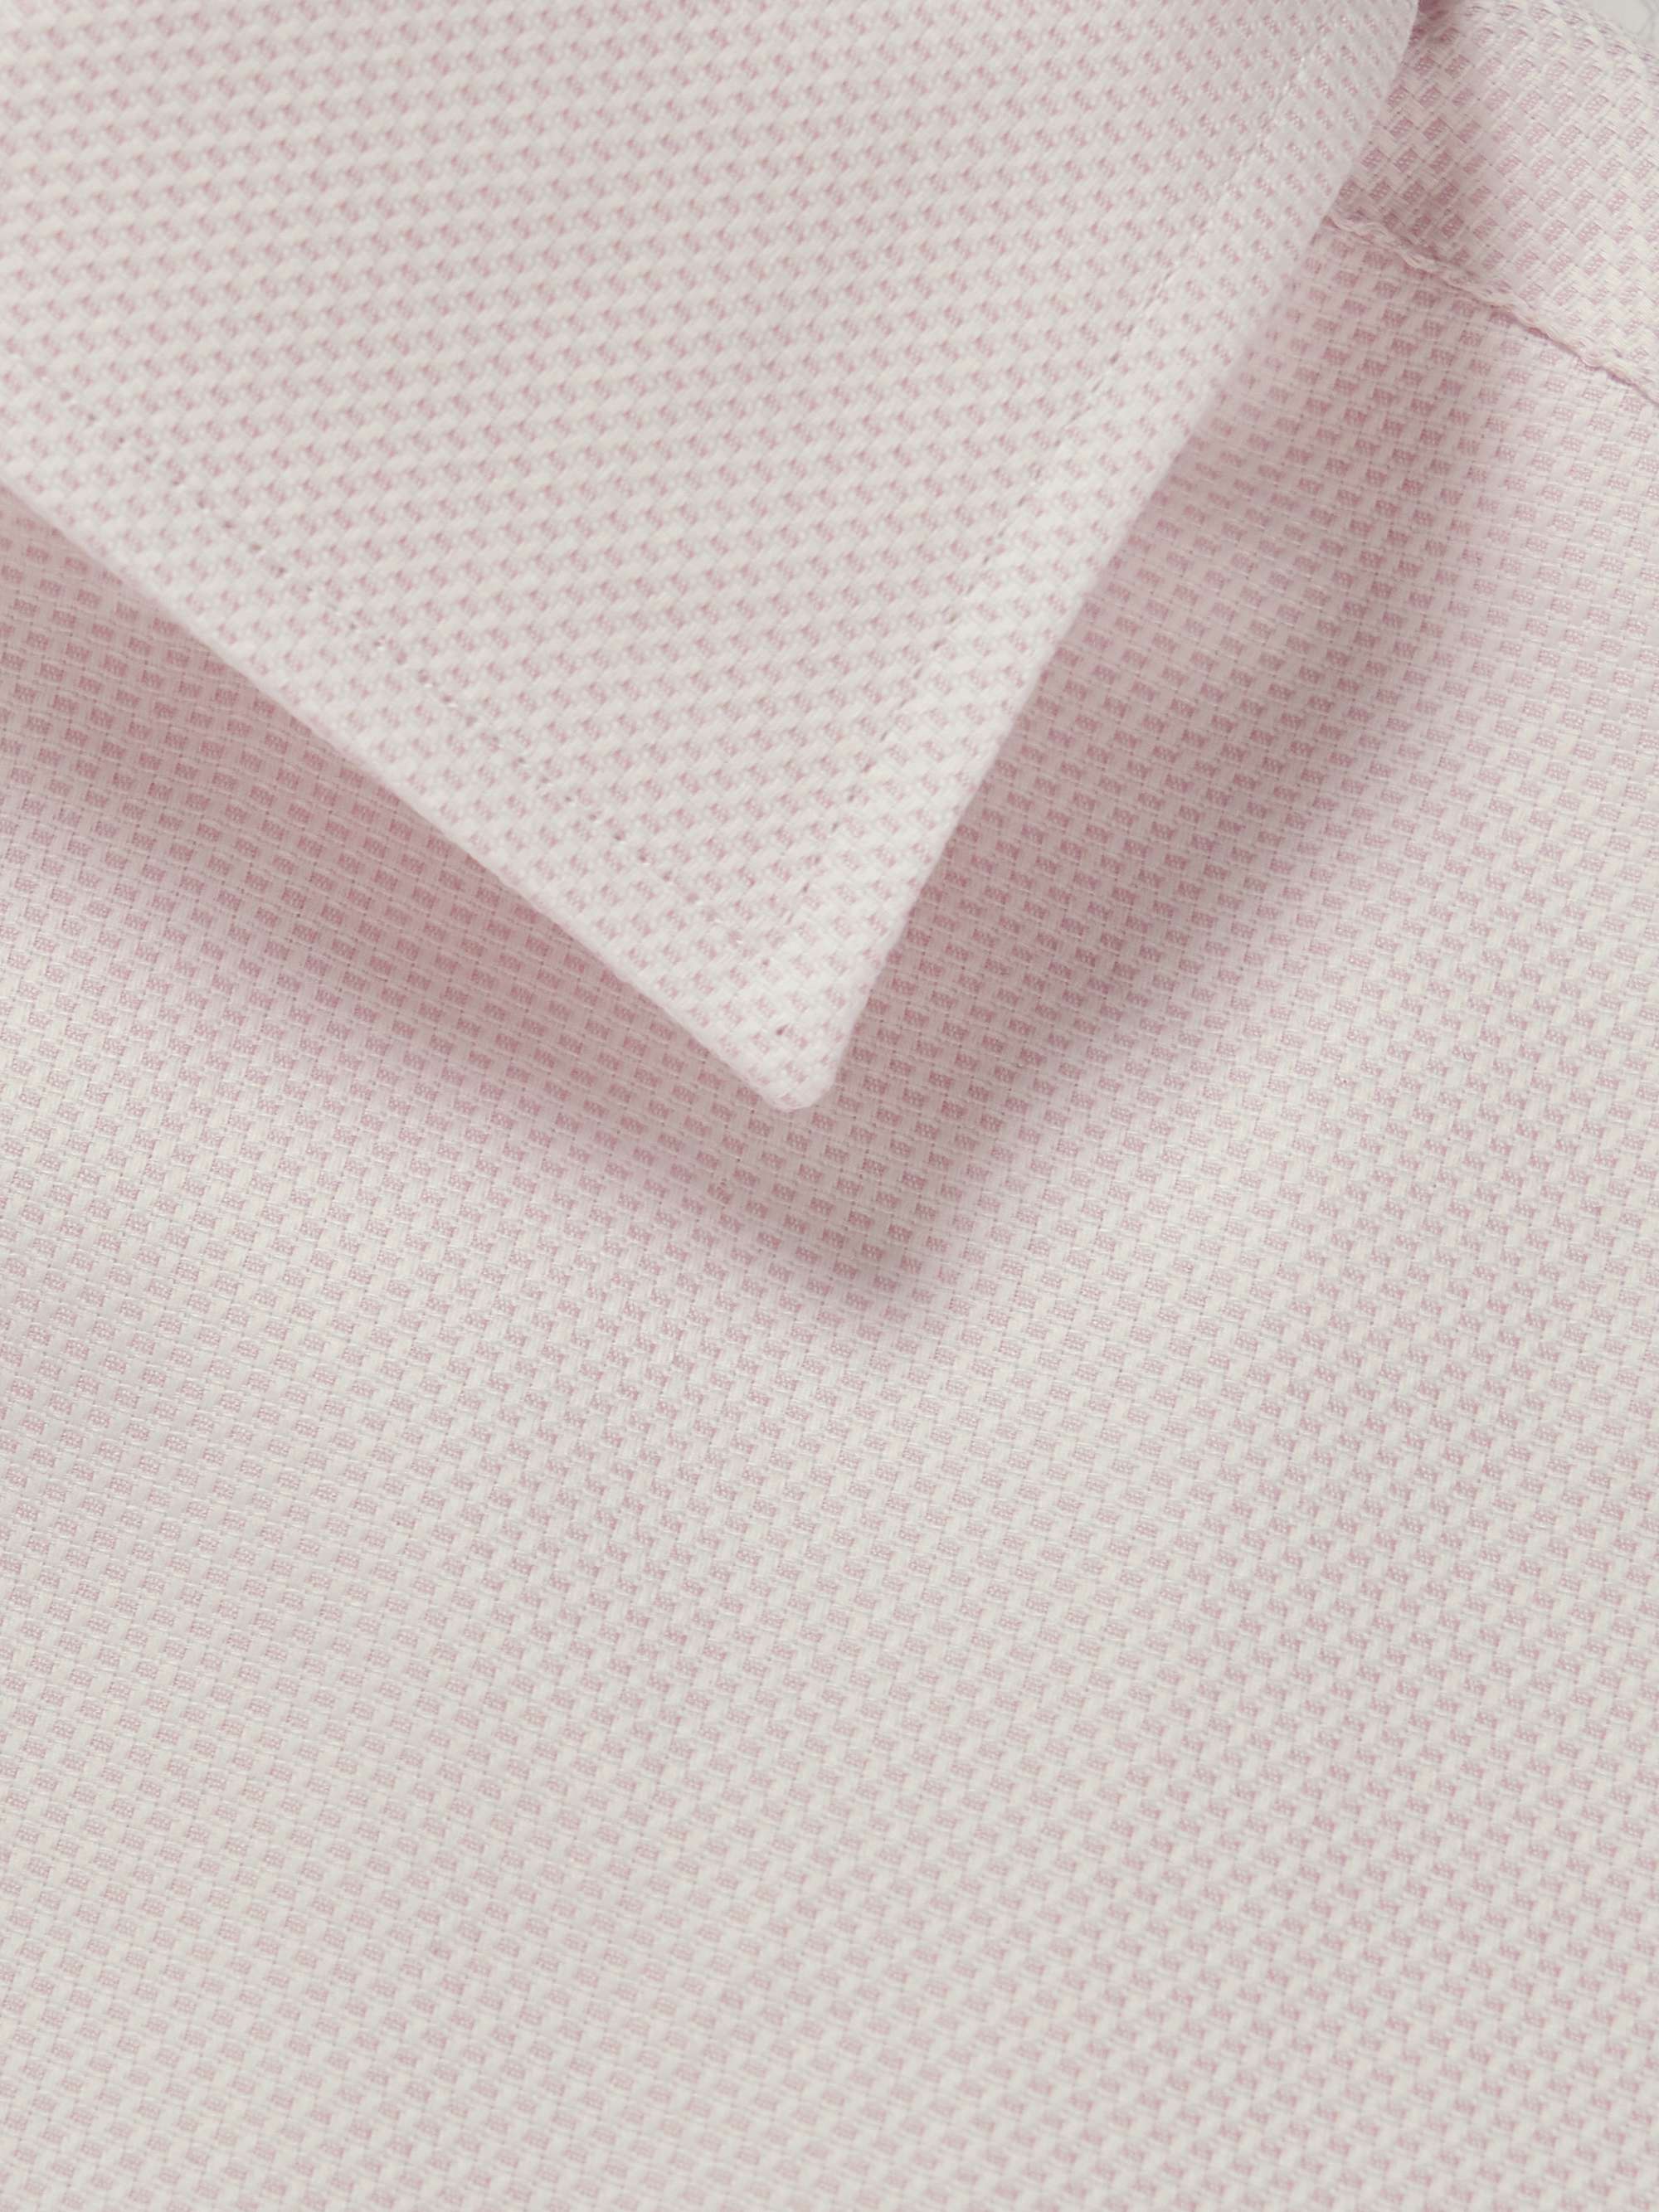 CANALI Slim-Fit Cotton Shirt for Men | MR PORTER